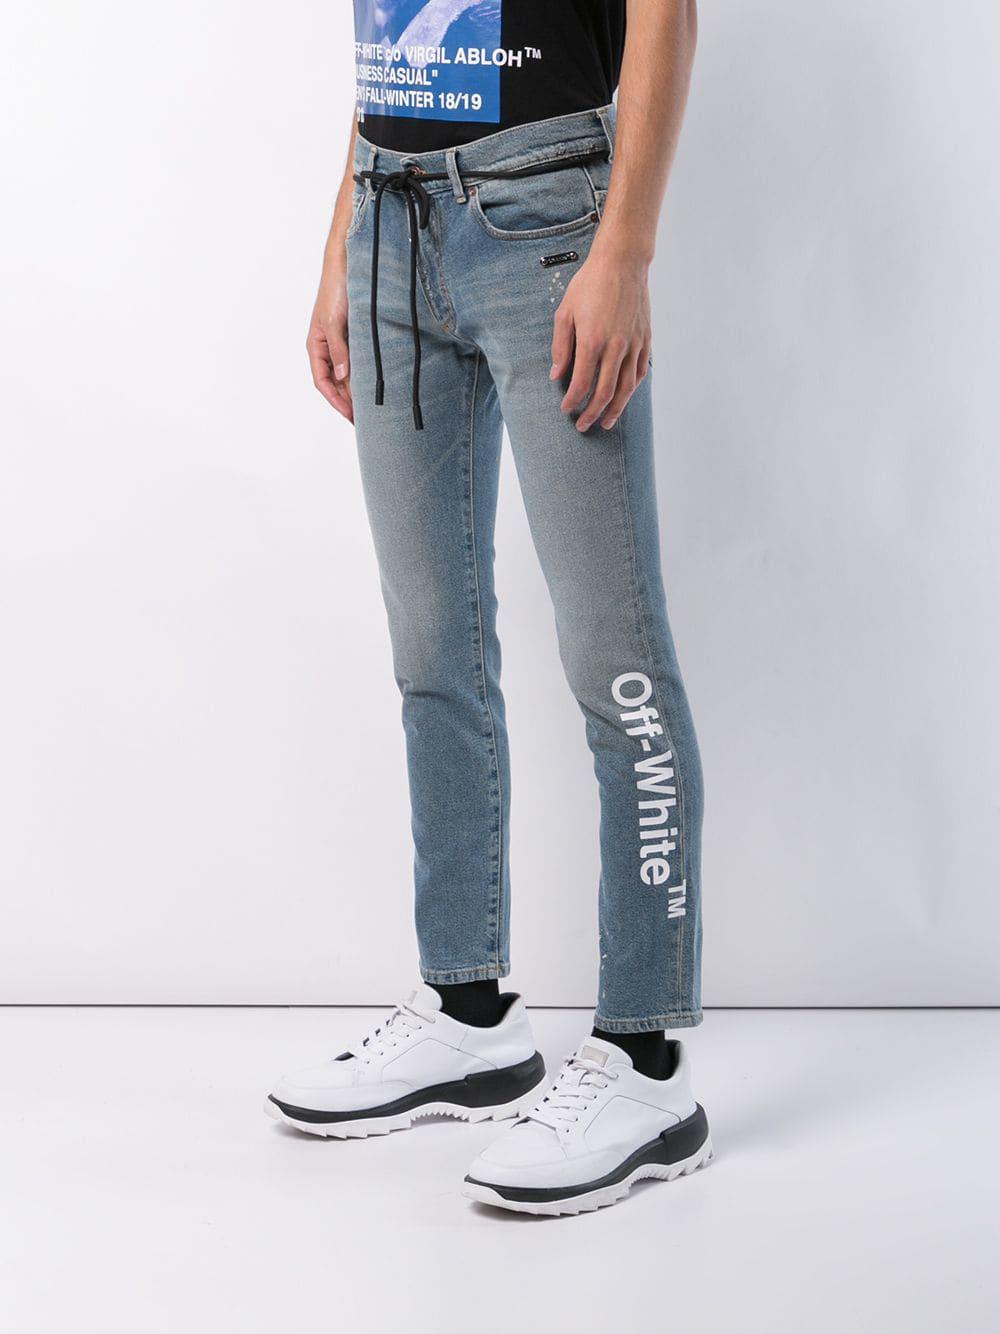 Off-White c/o Virgil Abloh Denim Skinny Fitted Jeans in Blue for Men - Lyst